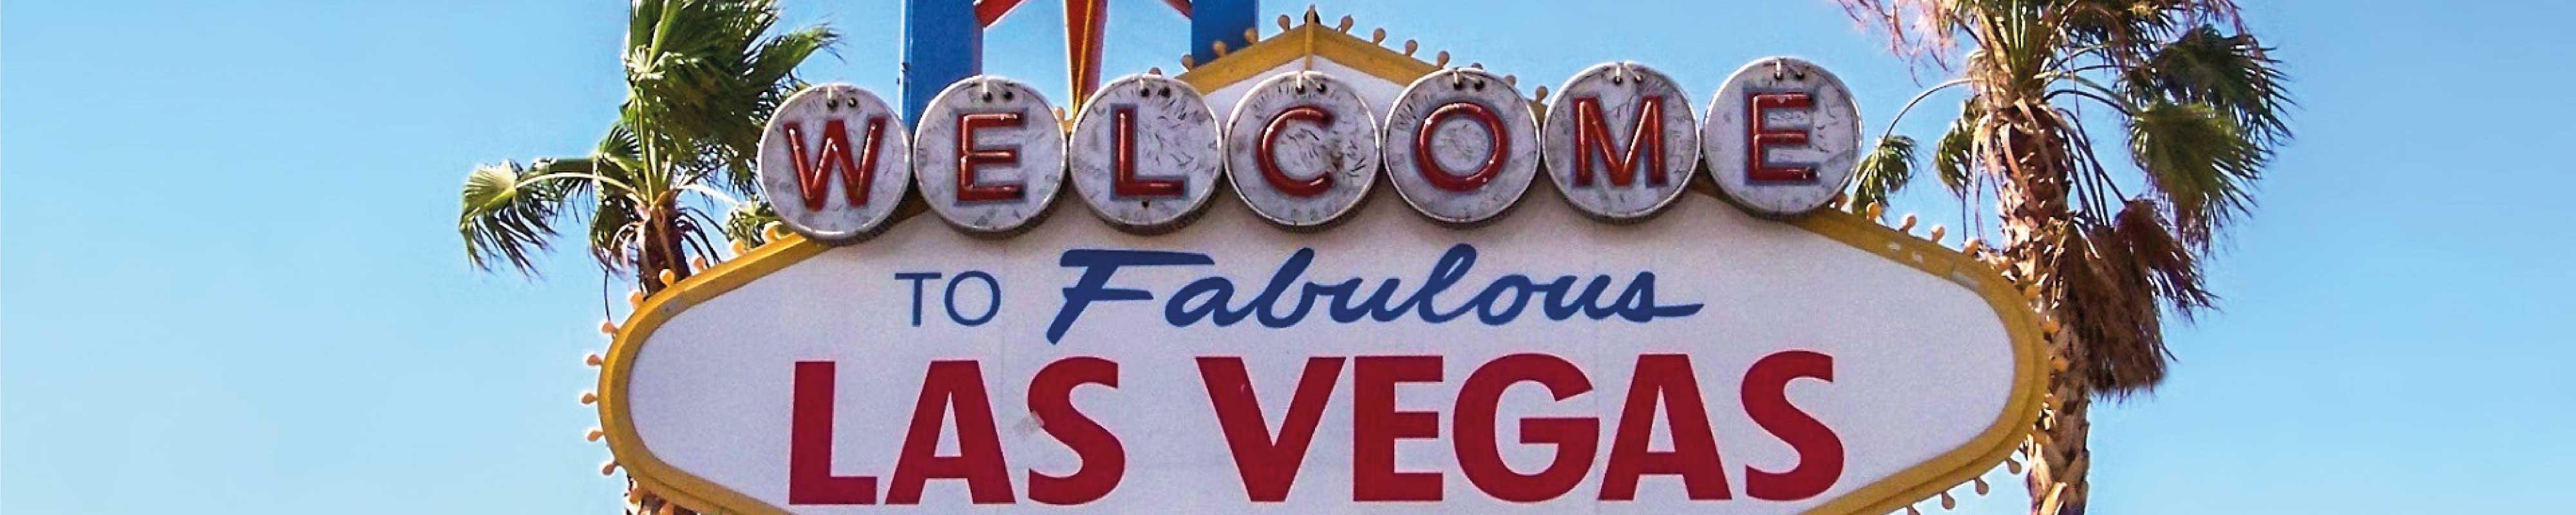 Depósito de Bagagem | Harrah's Las Vegas em Las Vegas - Nannybag